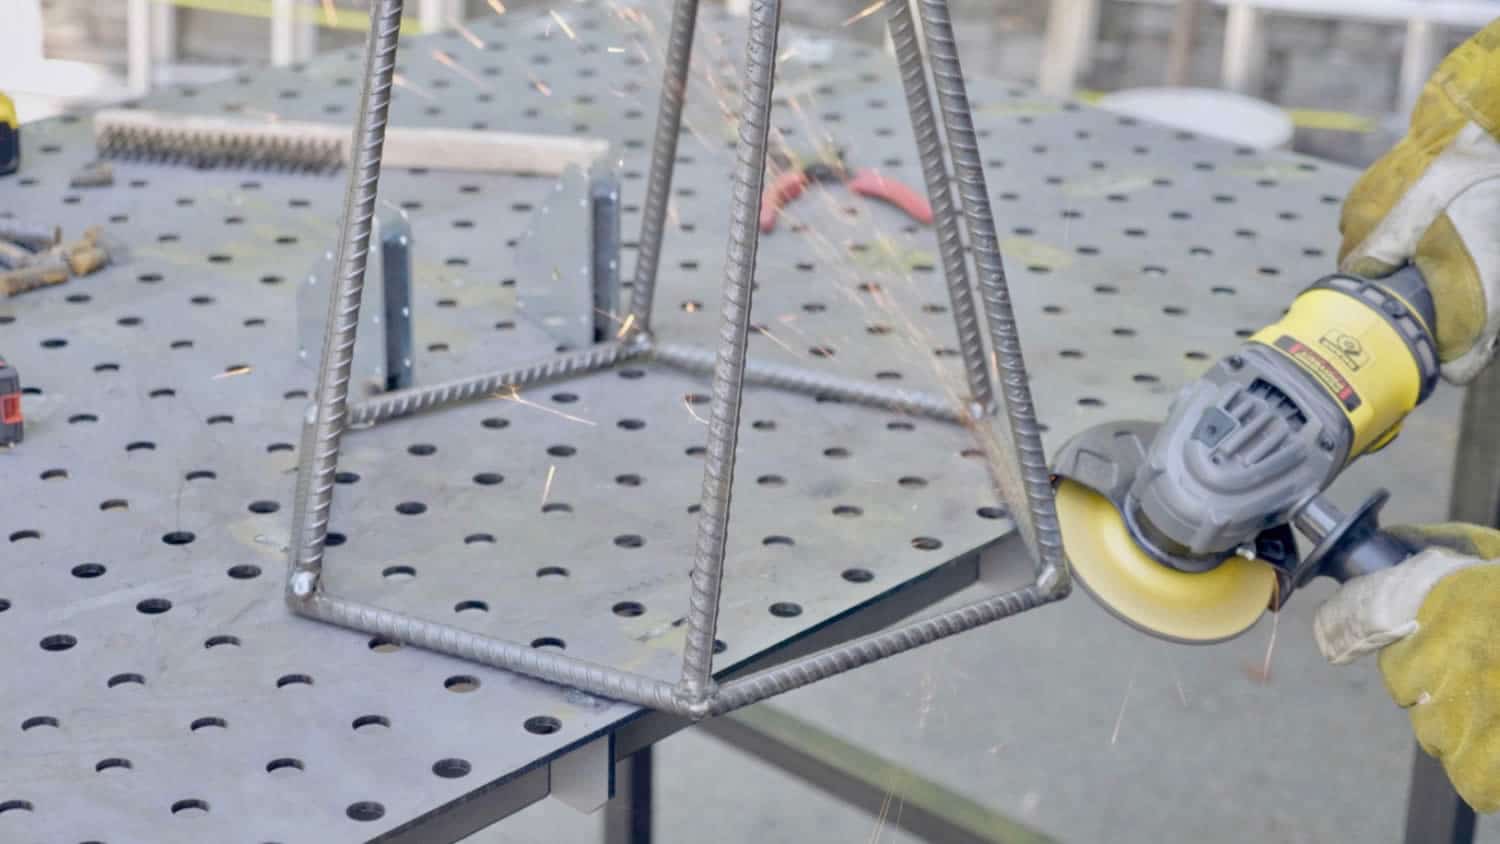 concrete-steel-table-arrow-project-step6e.jpg